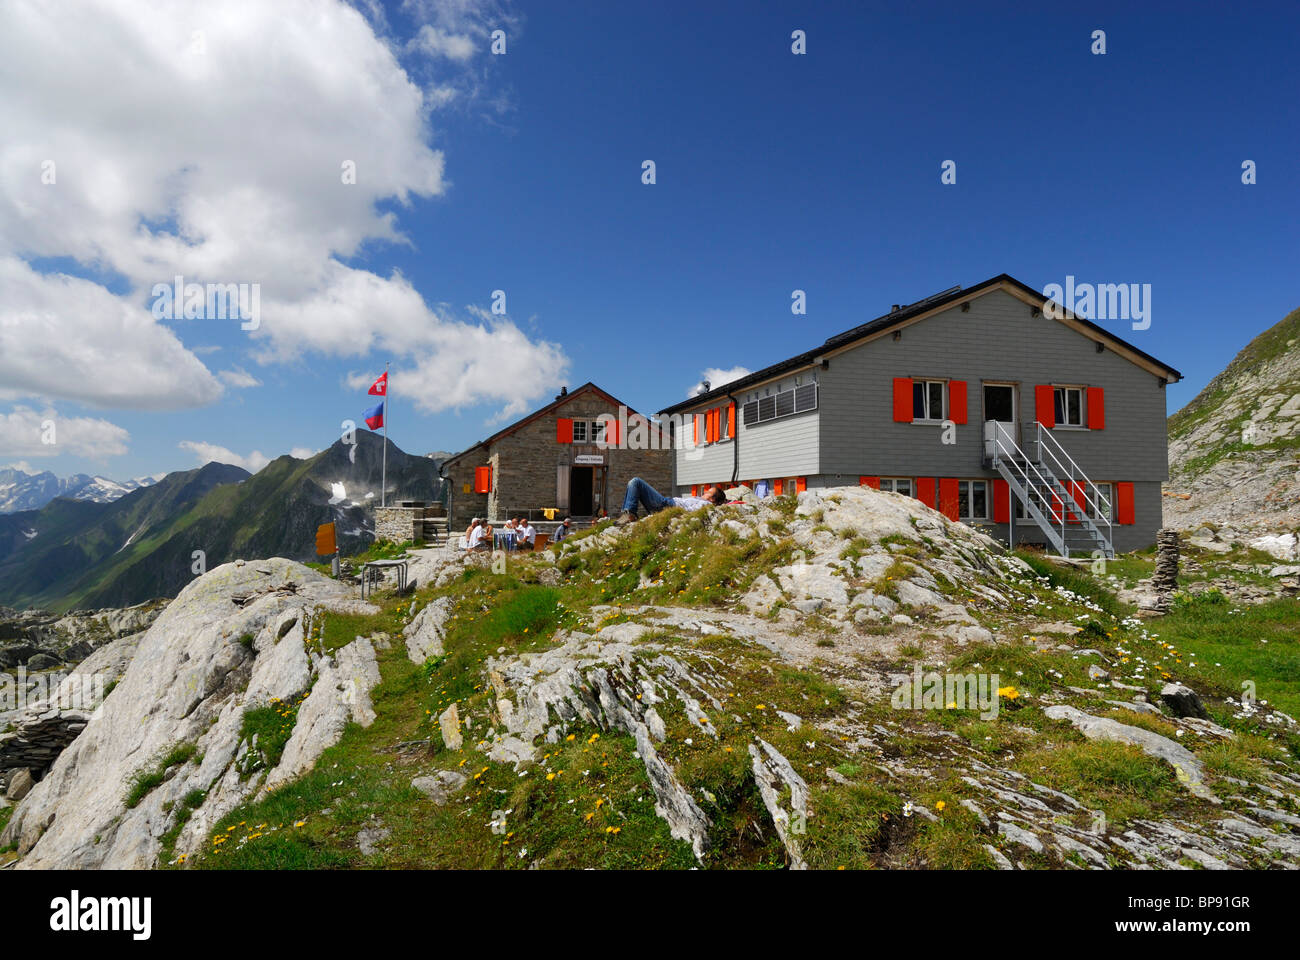 Mountain lodge, Adula Alps, Canton of Ticino, Switzerland Stock Photo